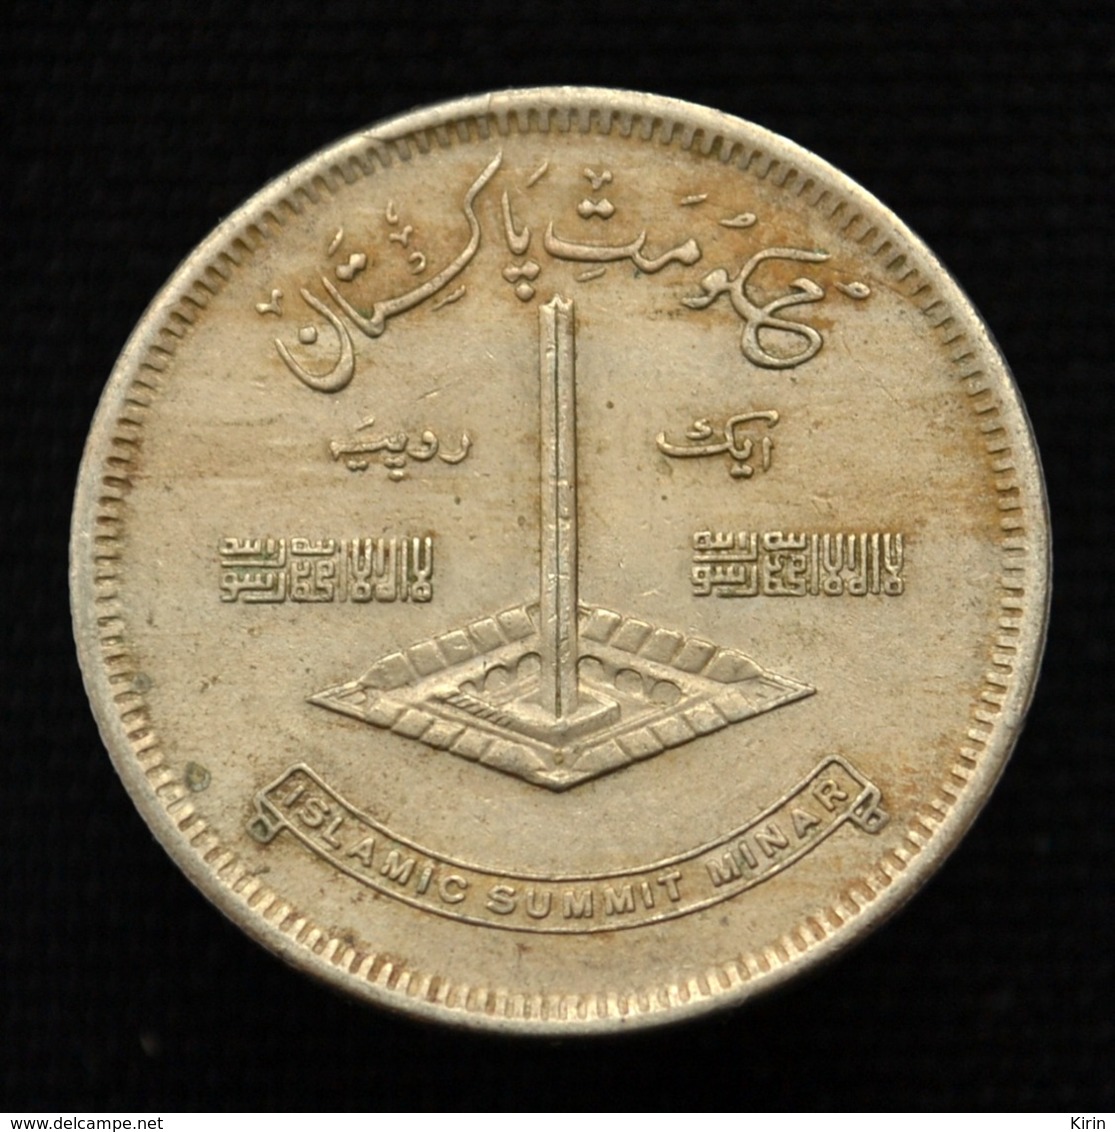 Pakistan 1 Rupee 1977. Km45. Islamic Summit Conference Coin - Pakistan